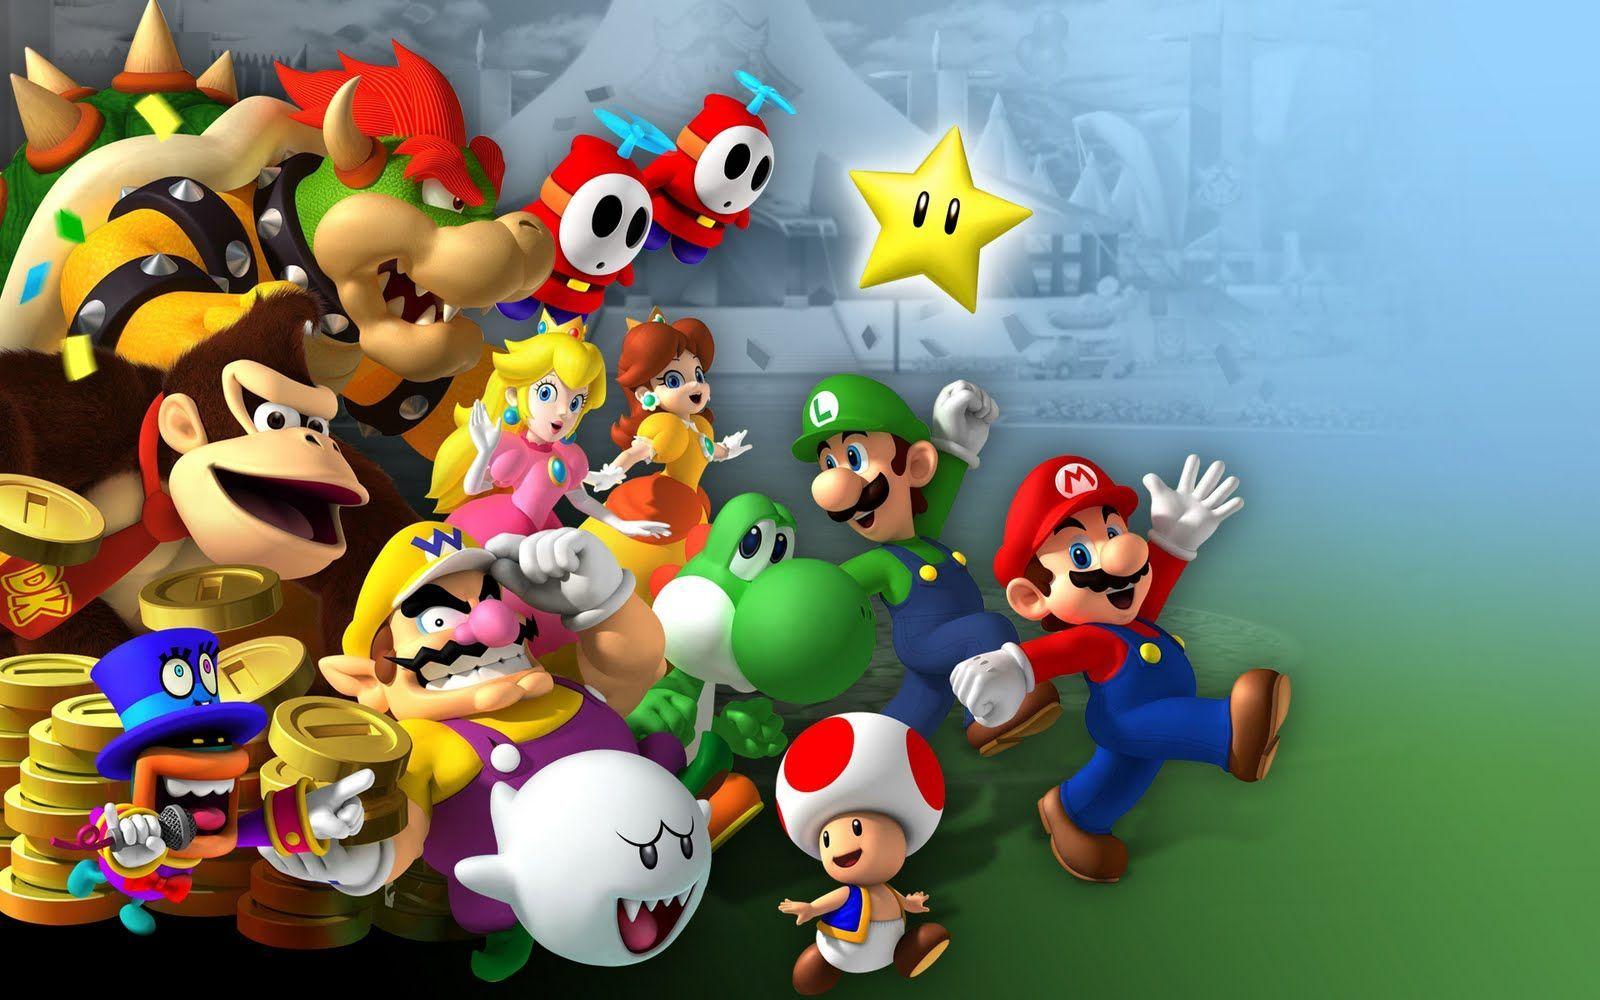 HD desktop wallpaper: Video Game, New Super Mario Bros download free  picture #1462693